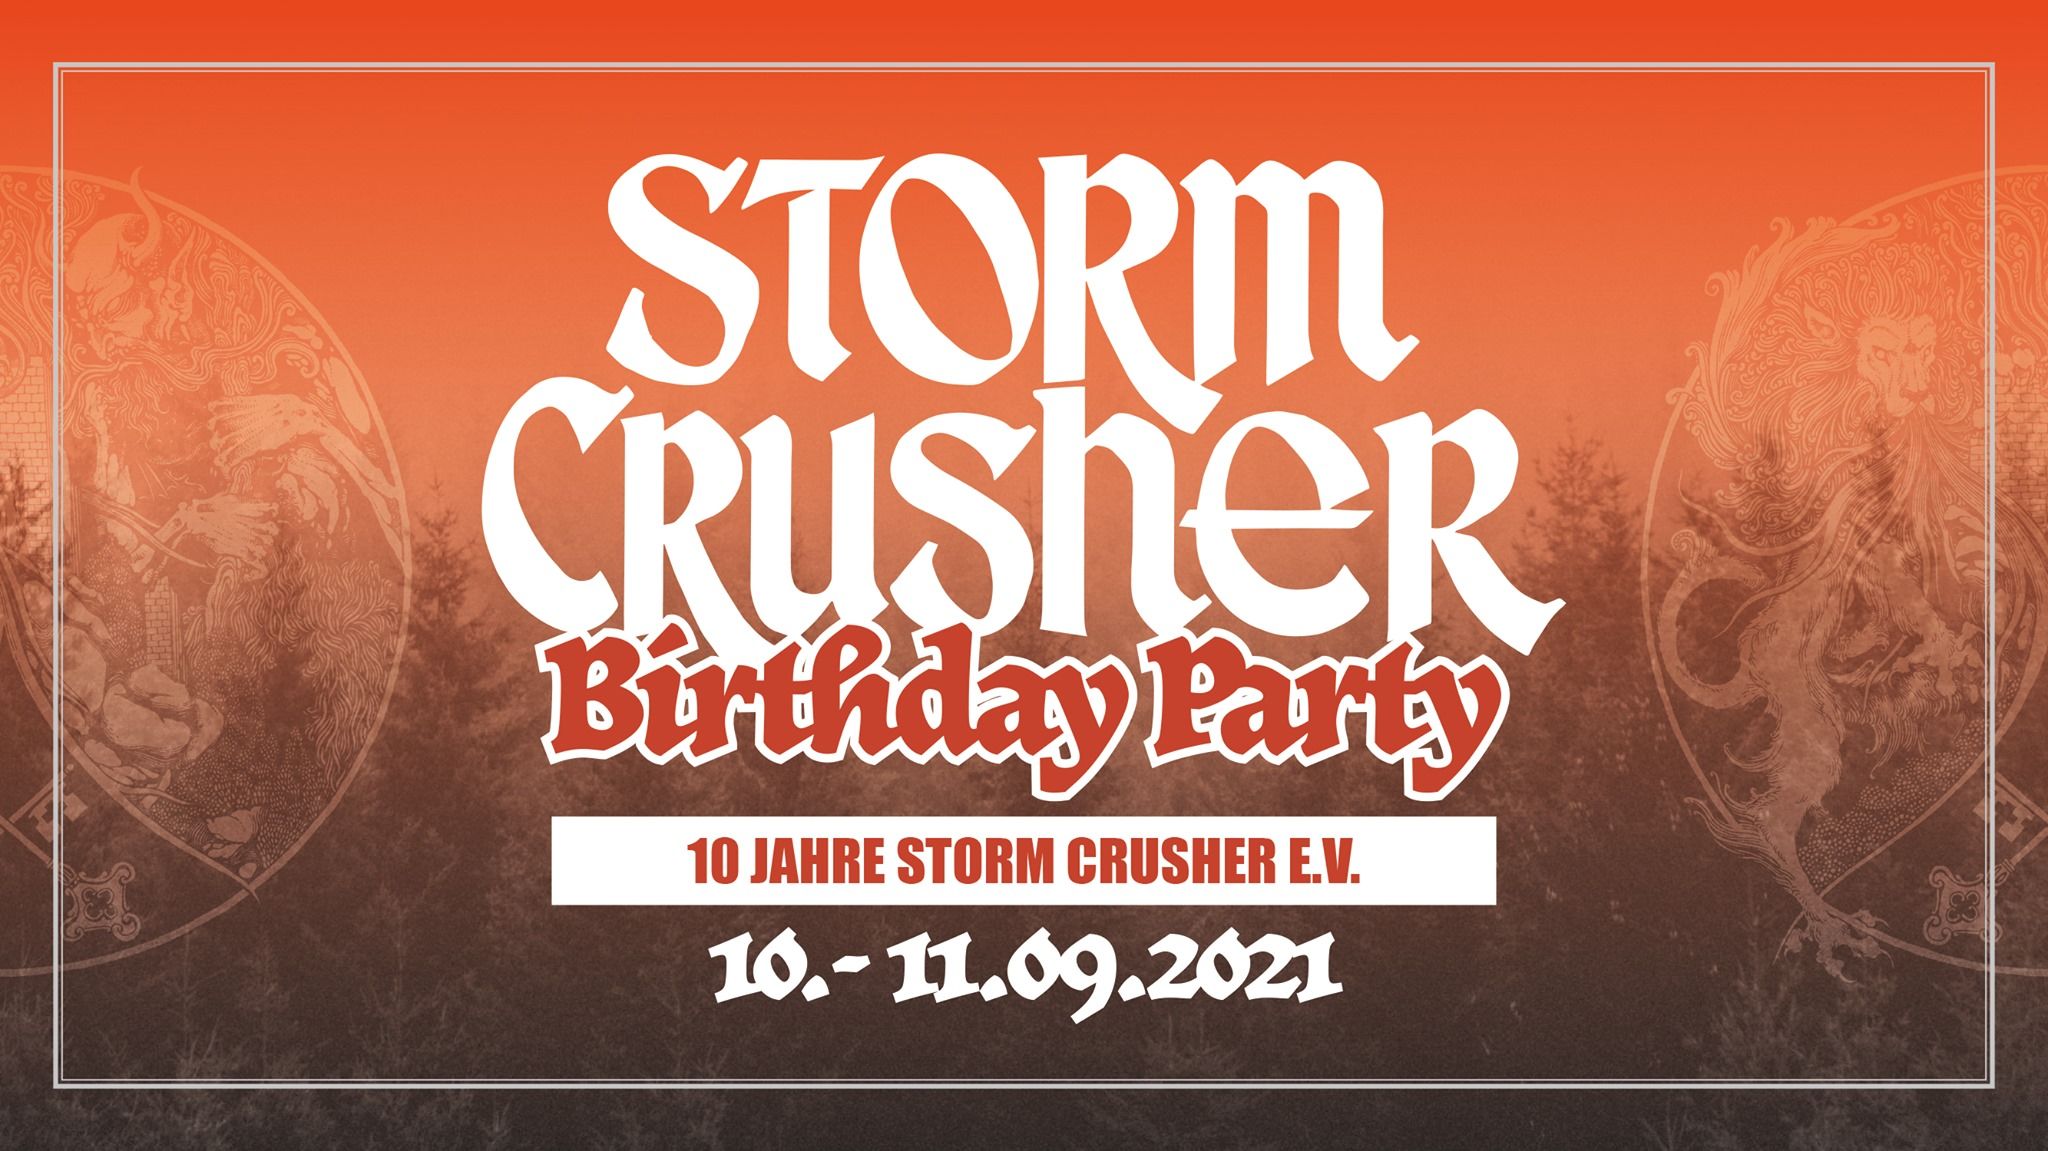 Storm Crusher Birthday Party im September